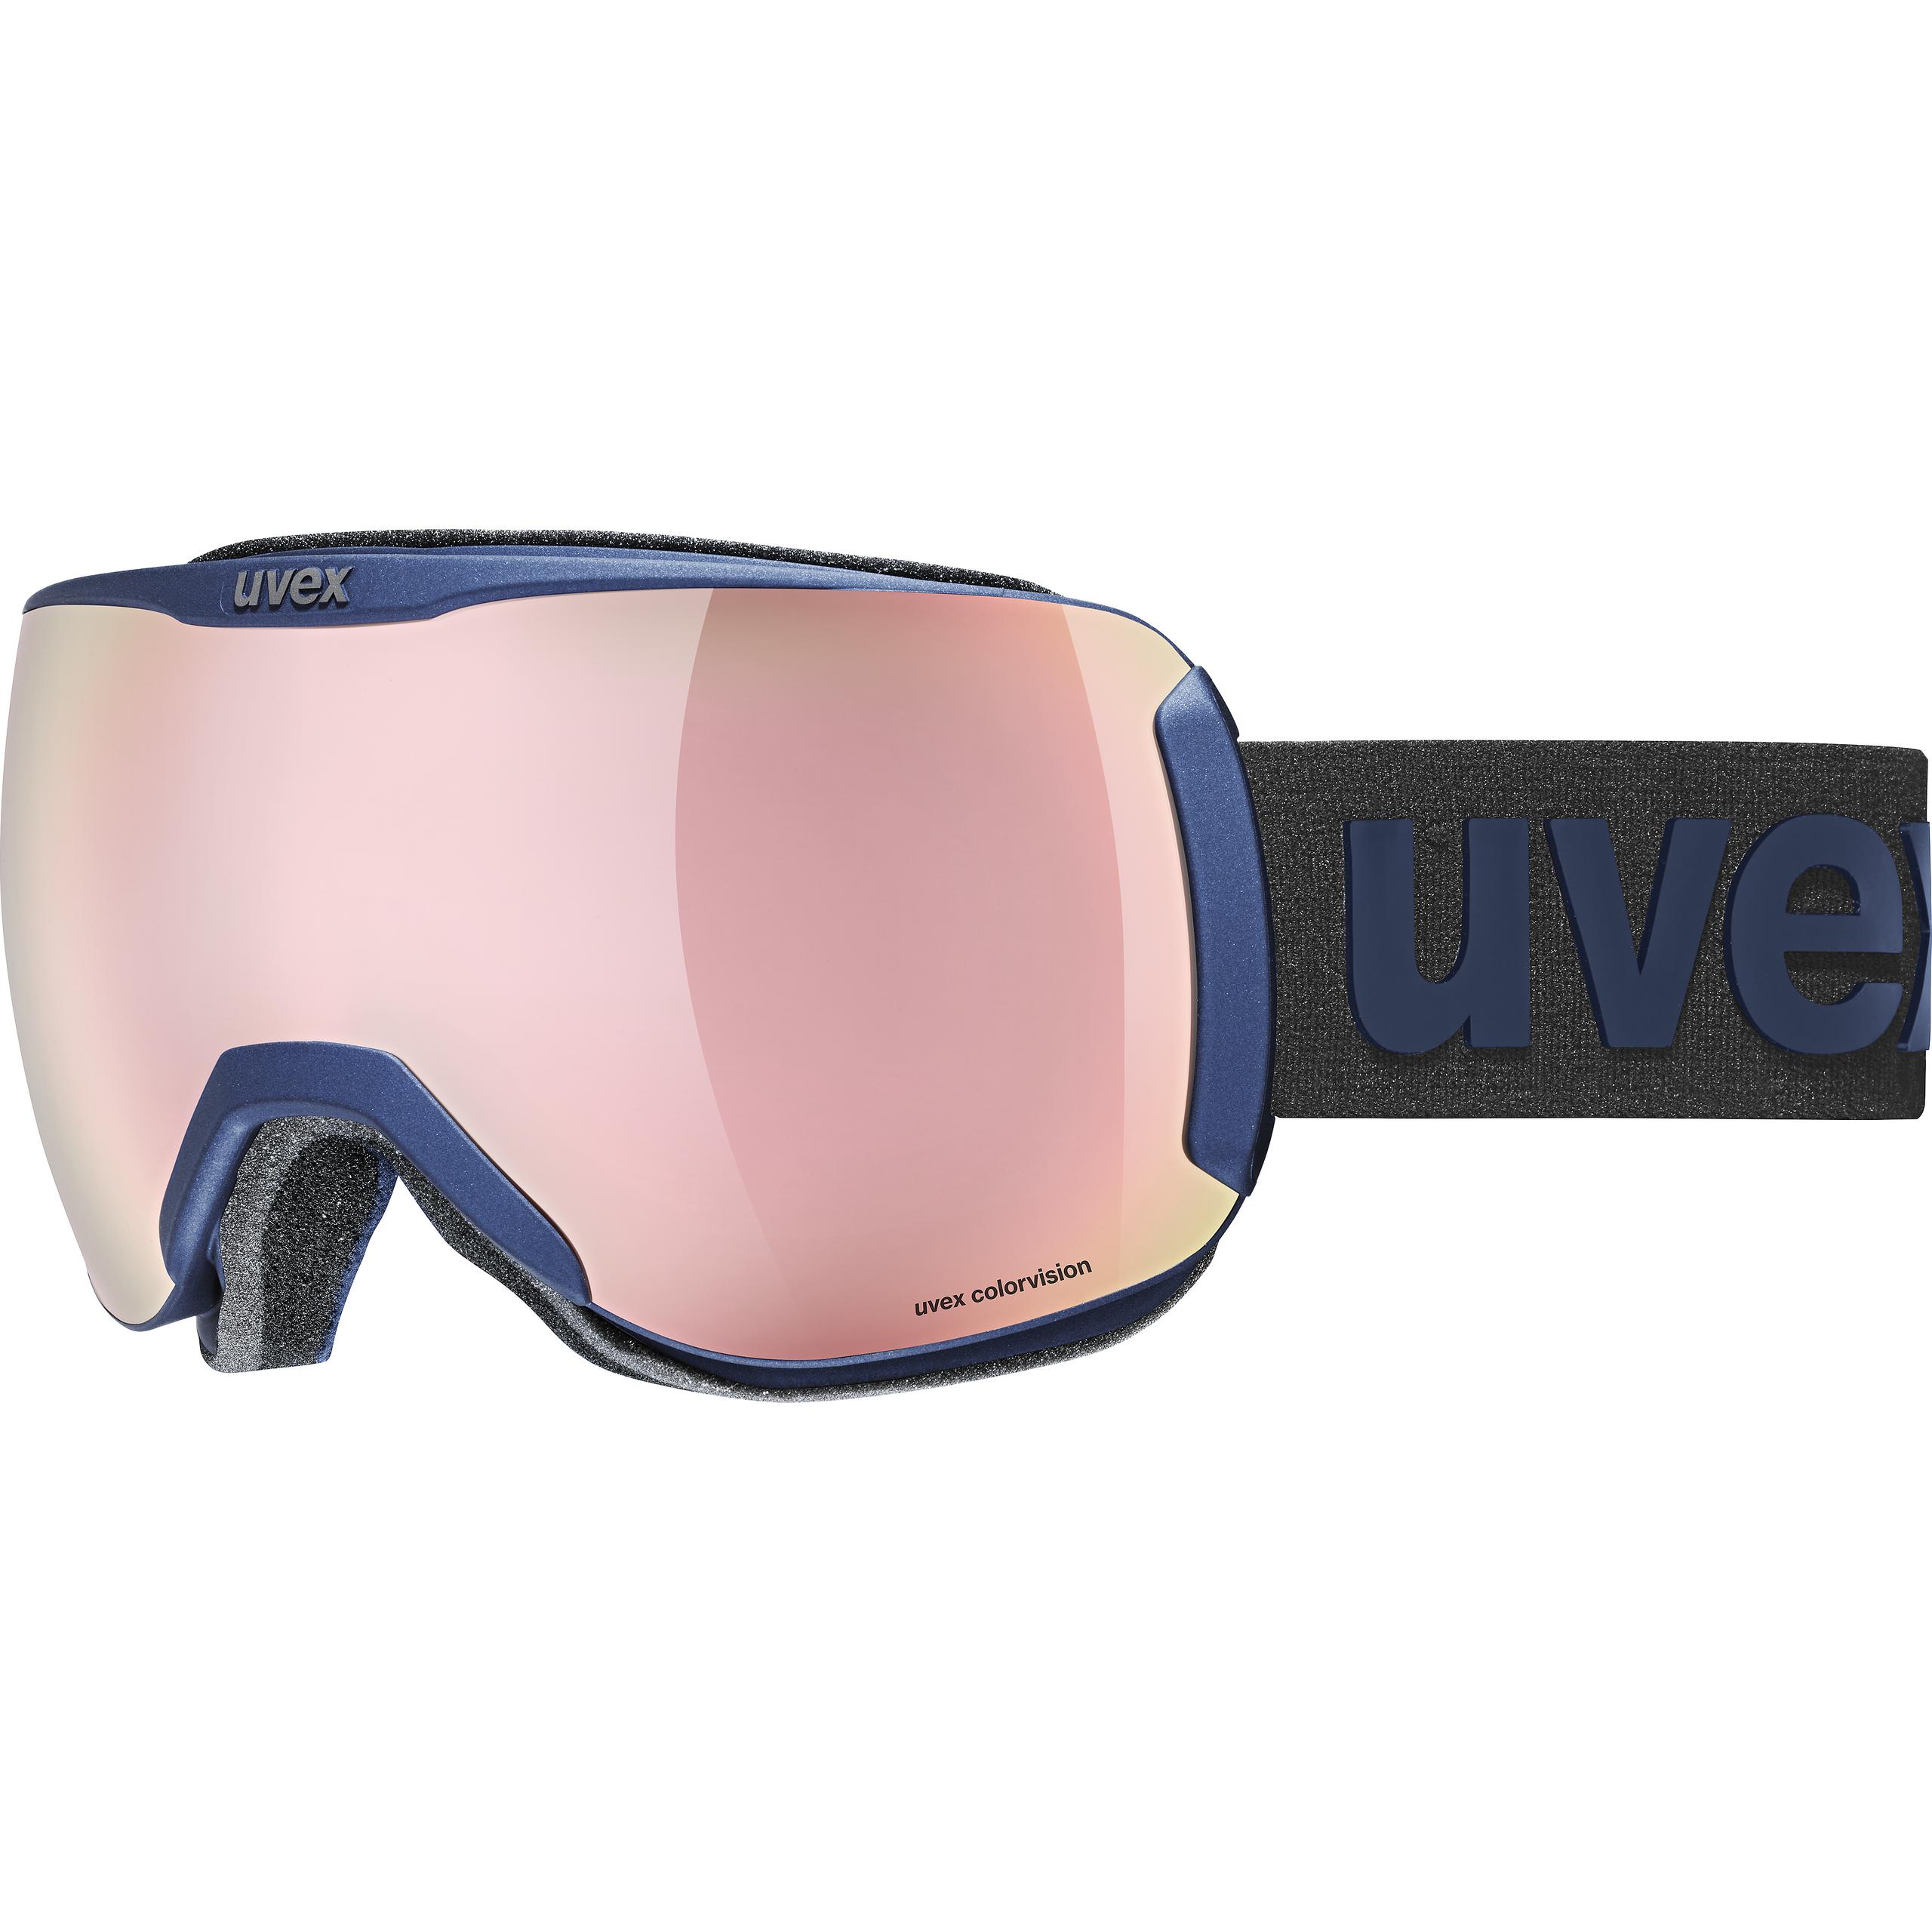 Skibrille Snowboard Brille UVEX VISION OPTIC OTG /Over the glasses/ NEU !!! 